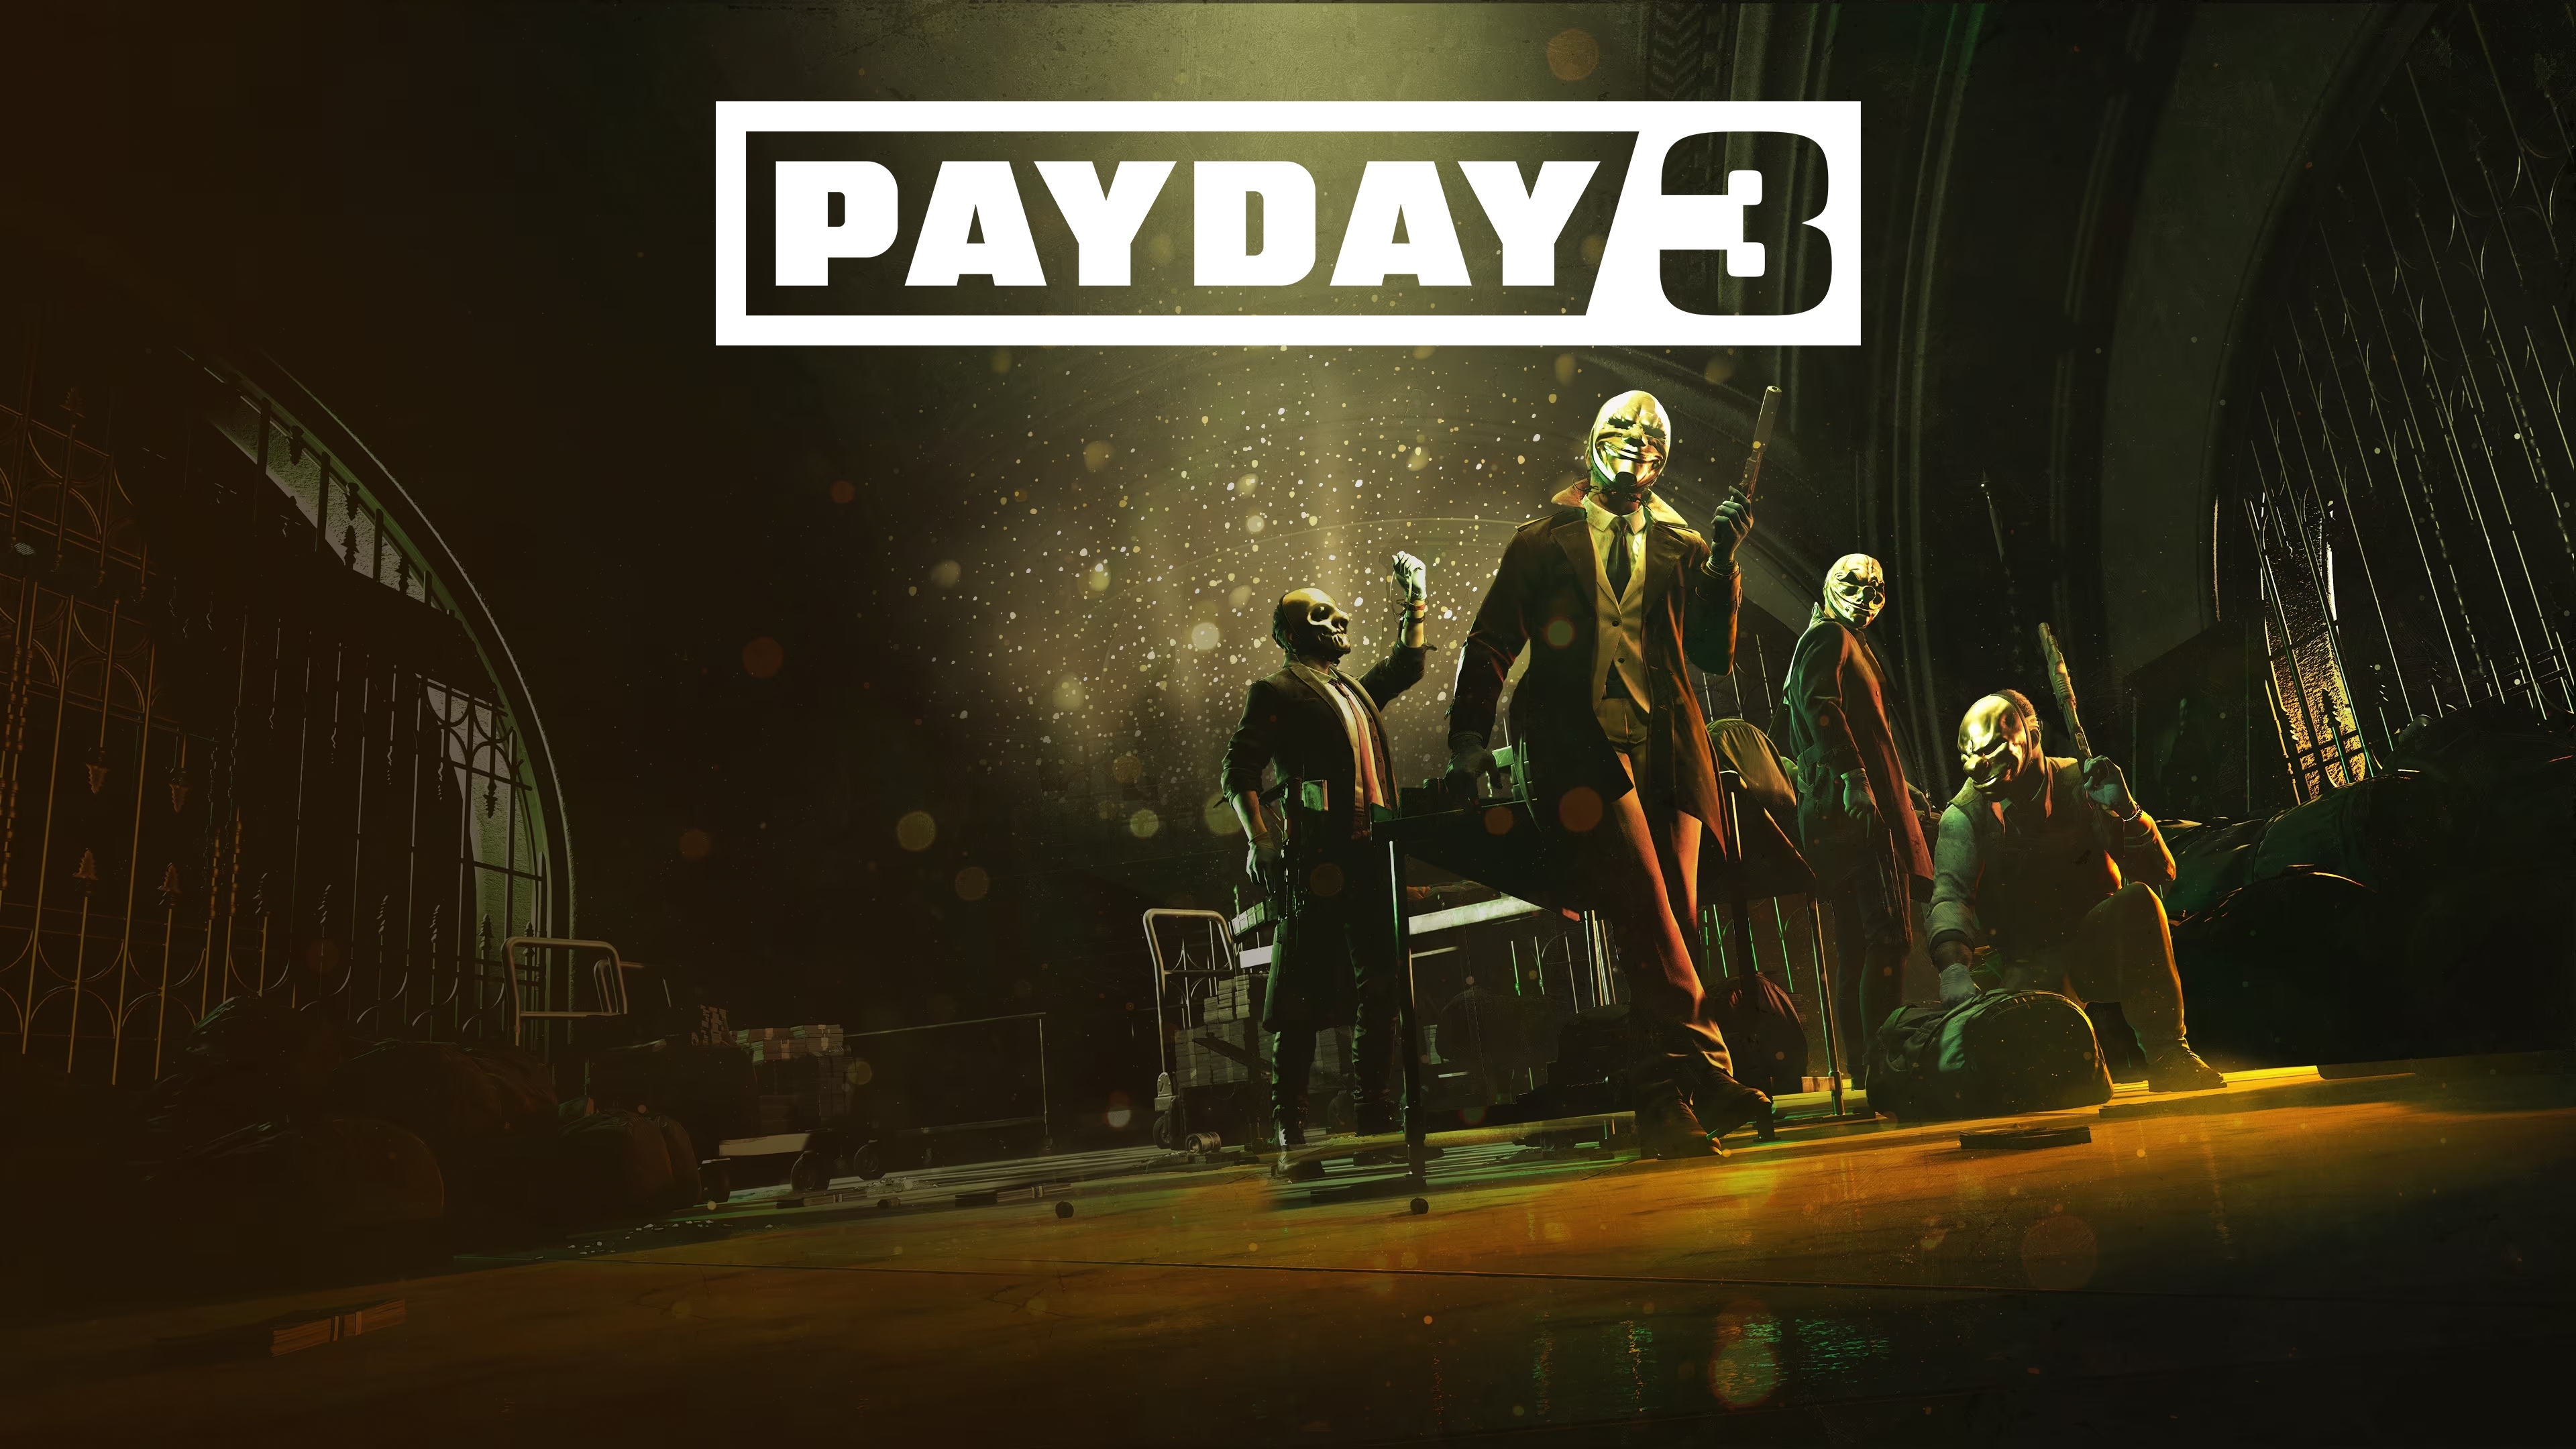 Payday 3 - Xbox Series X, Xbox Series X